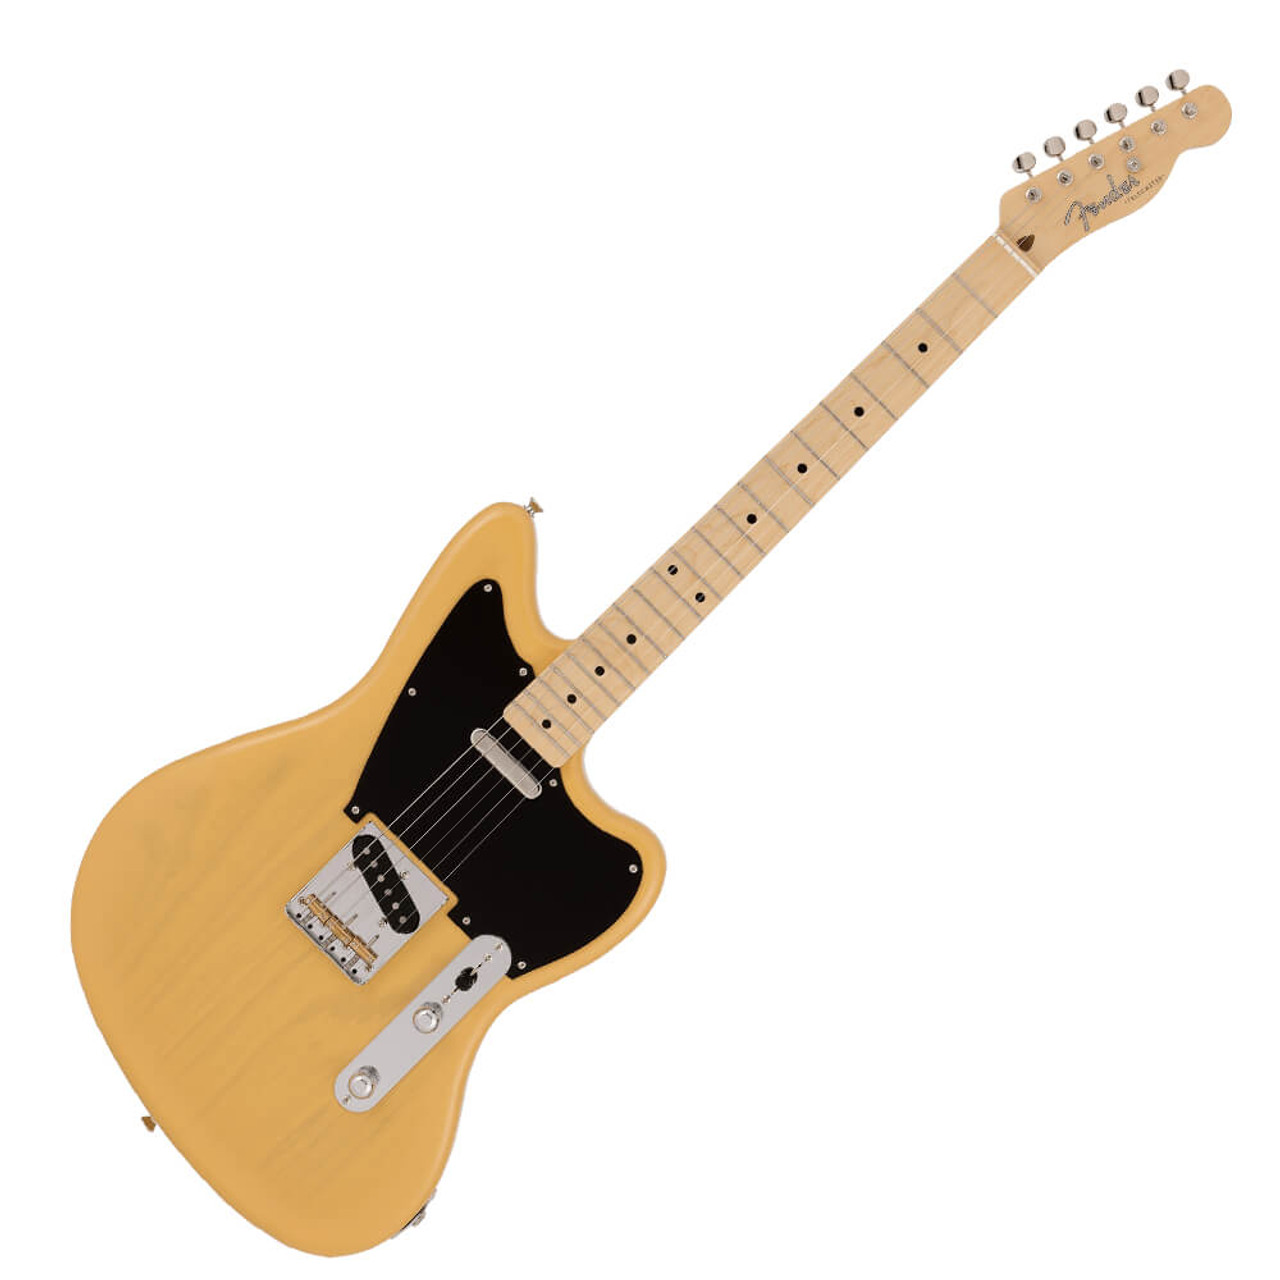 Fender Made in Japan 2021 Limited Offset Telecaster - Butterscotch Blonde